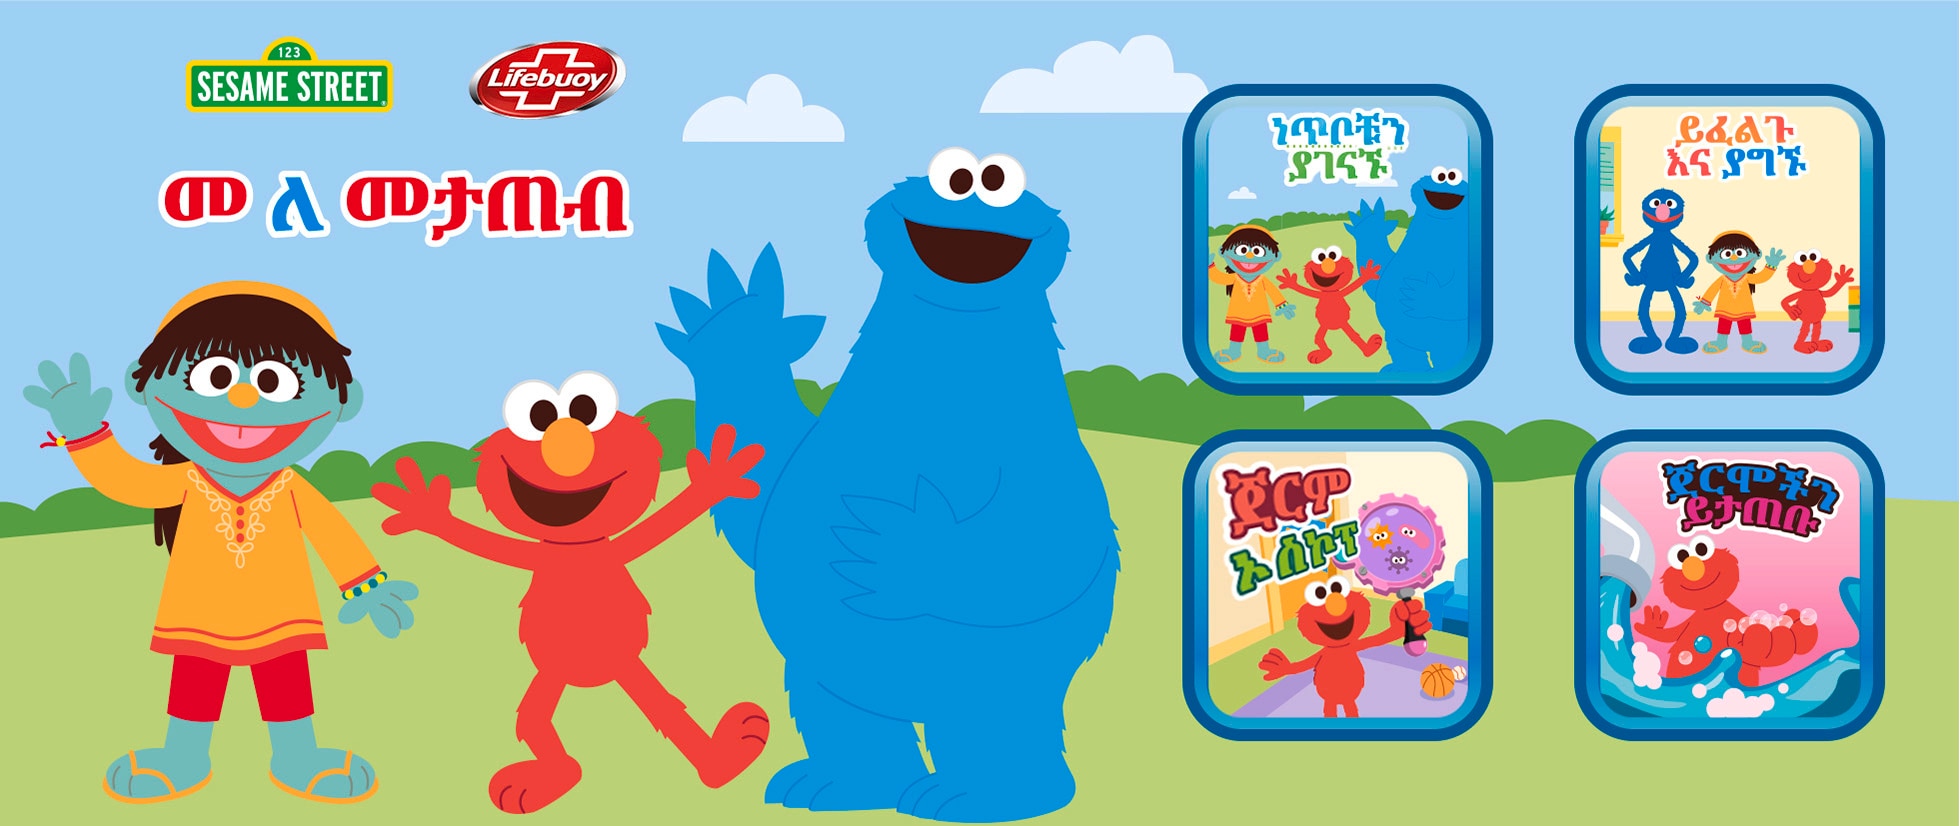 JPEG - Lifebuoy Sesame Games Banners